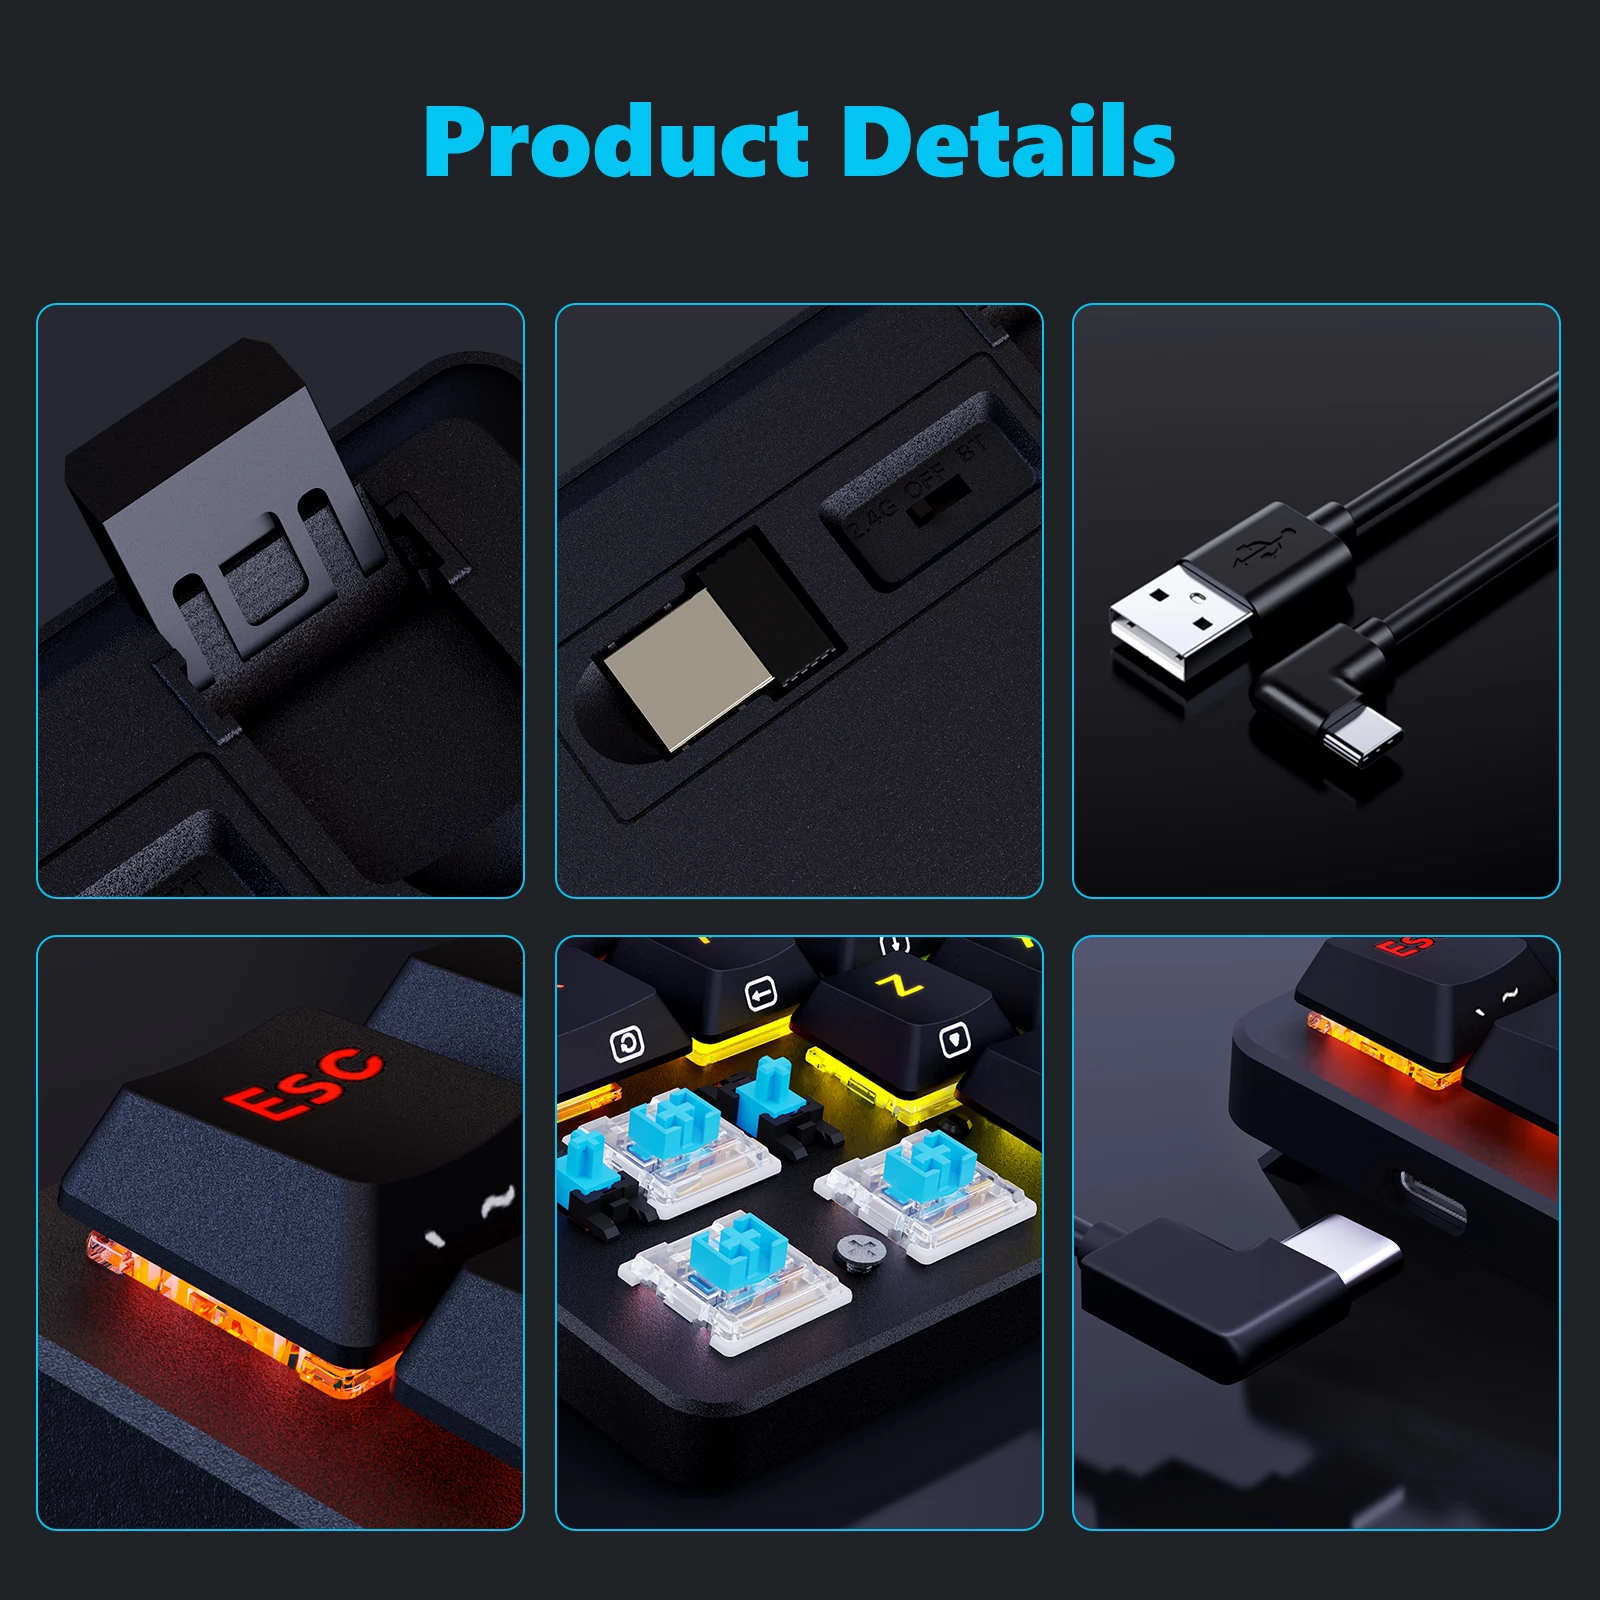 Redragon K615P-KBS Elise Pro RGB Mechanische Tastatur, kabellos, Bluetooth, Tri-Mode, ultradünn, flacher, blauer Schalter